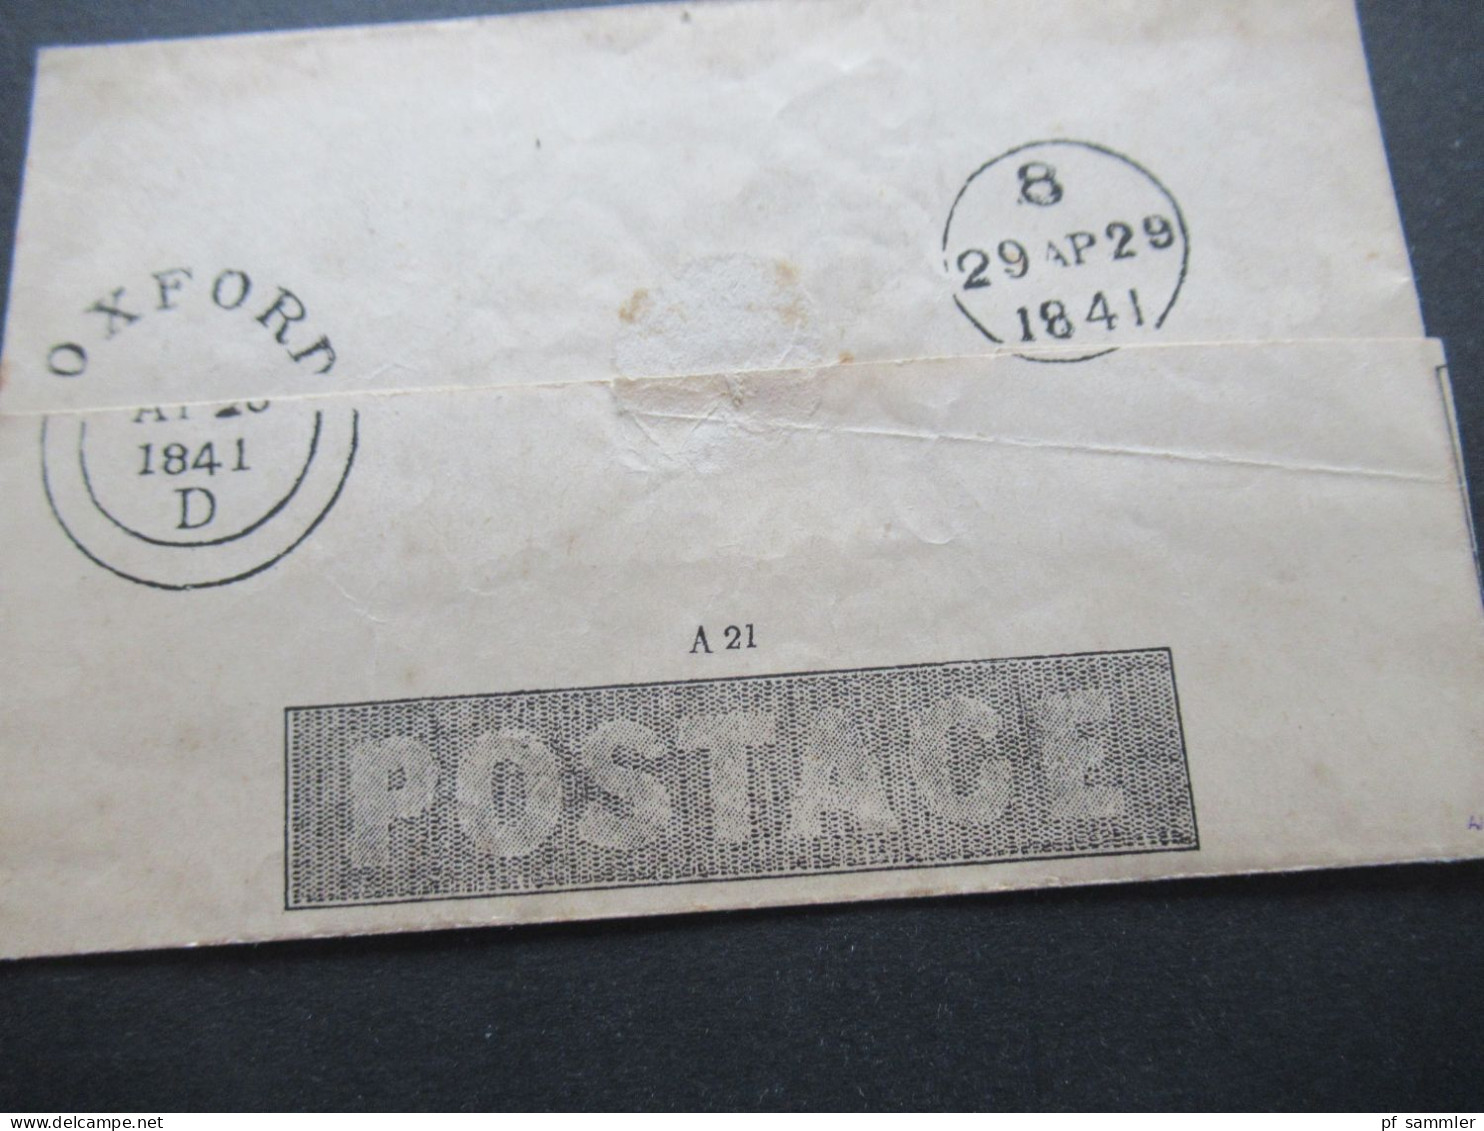 GB 1841 Mulready one Penny Oxford - London / kompletter Umschlag mit schwarzem Malteserkreuz / Postage A 21